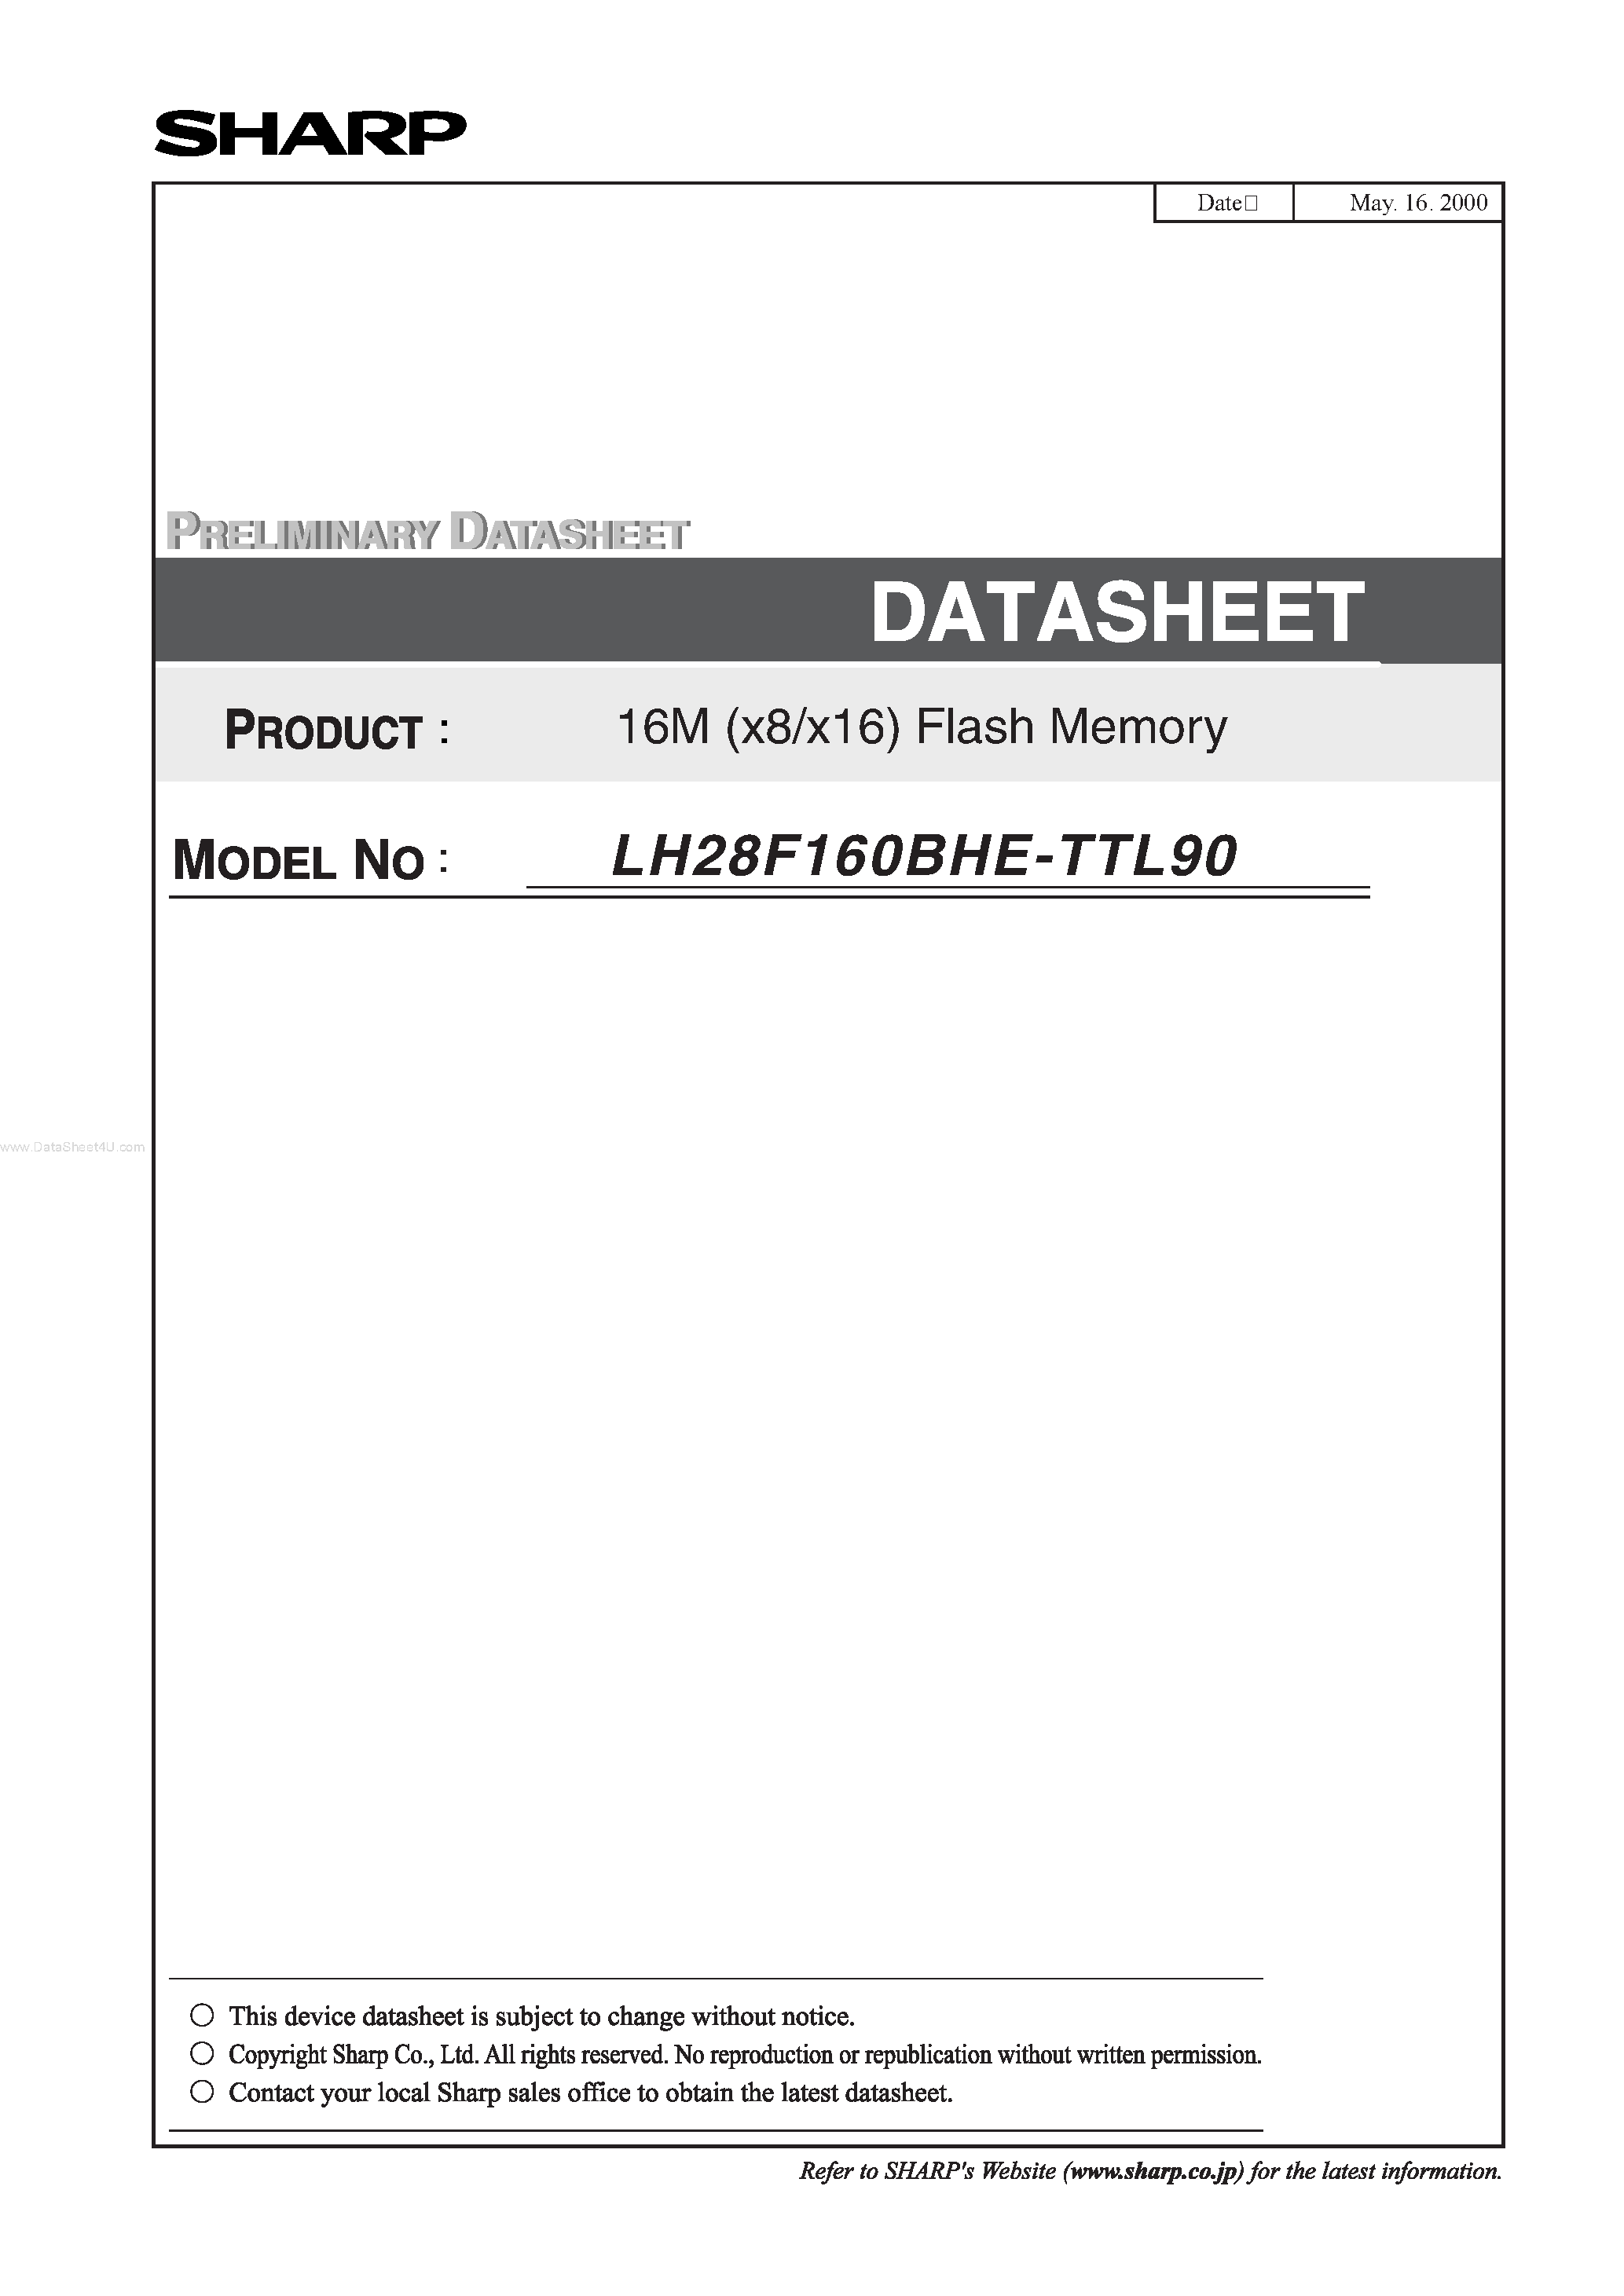 Datasheet LH28F160BHE-TTL90 - 16M (x8/x16) Flash Memory page 1